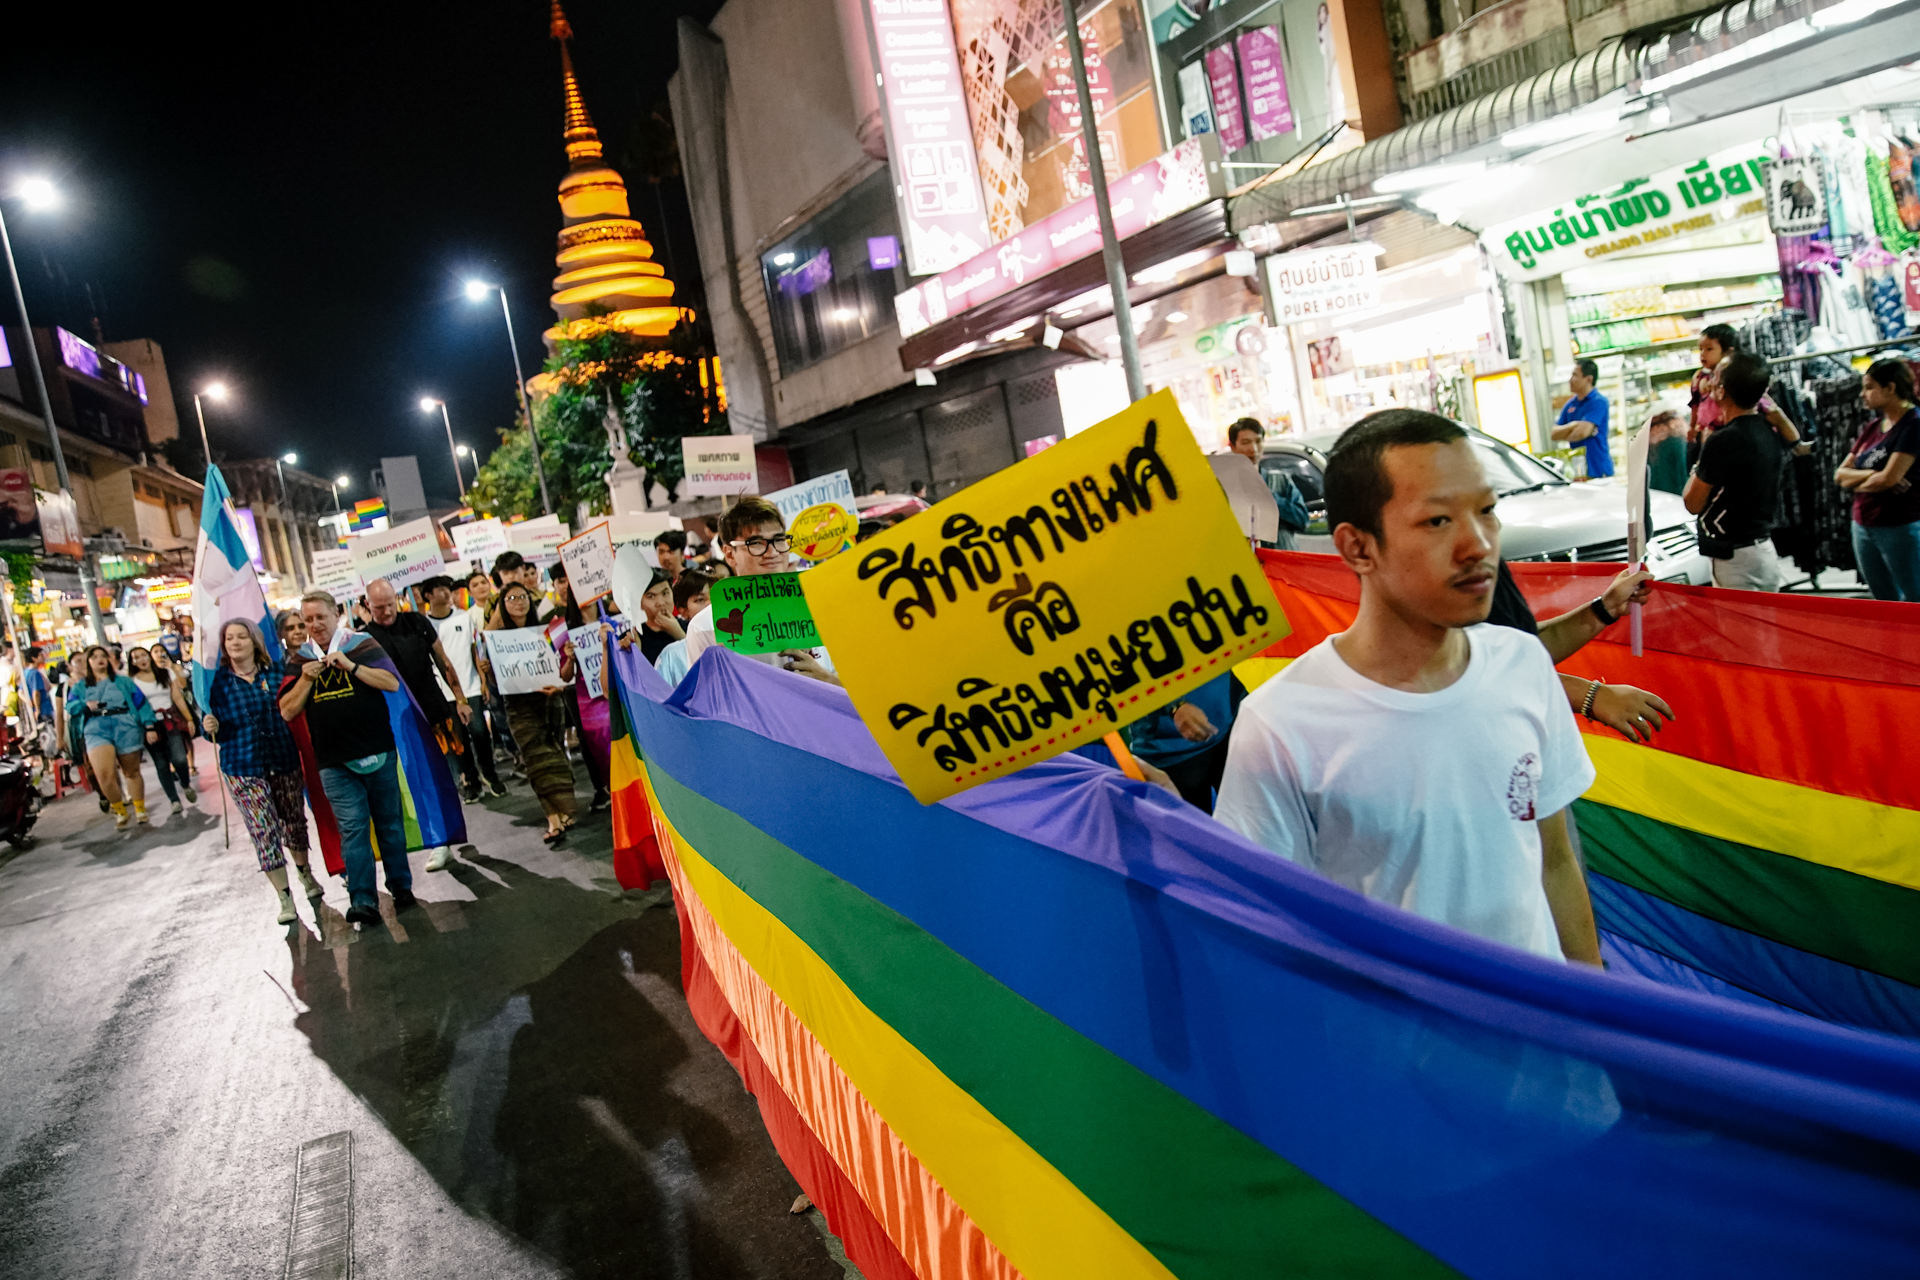 Chiang Mai Pride 2019, Thailand (2019)